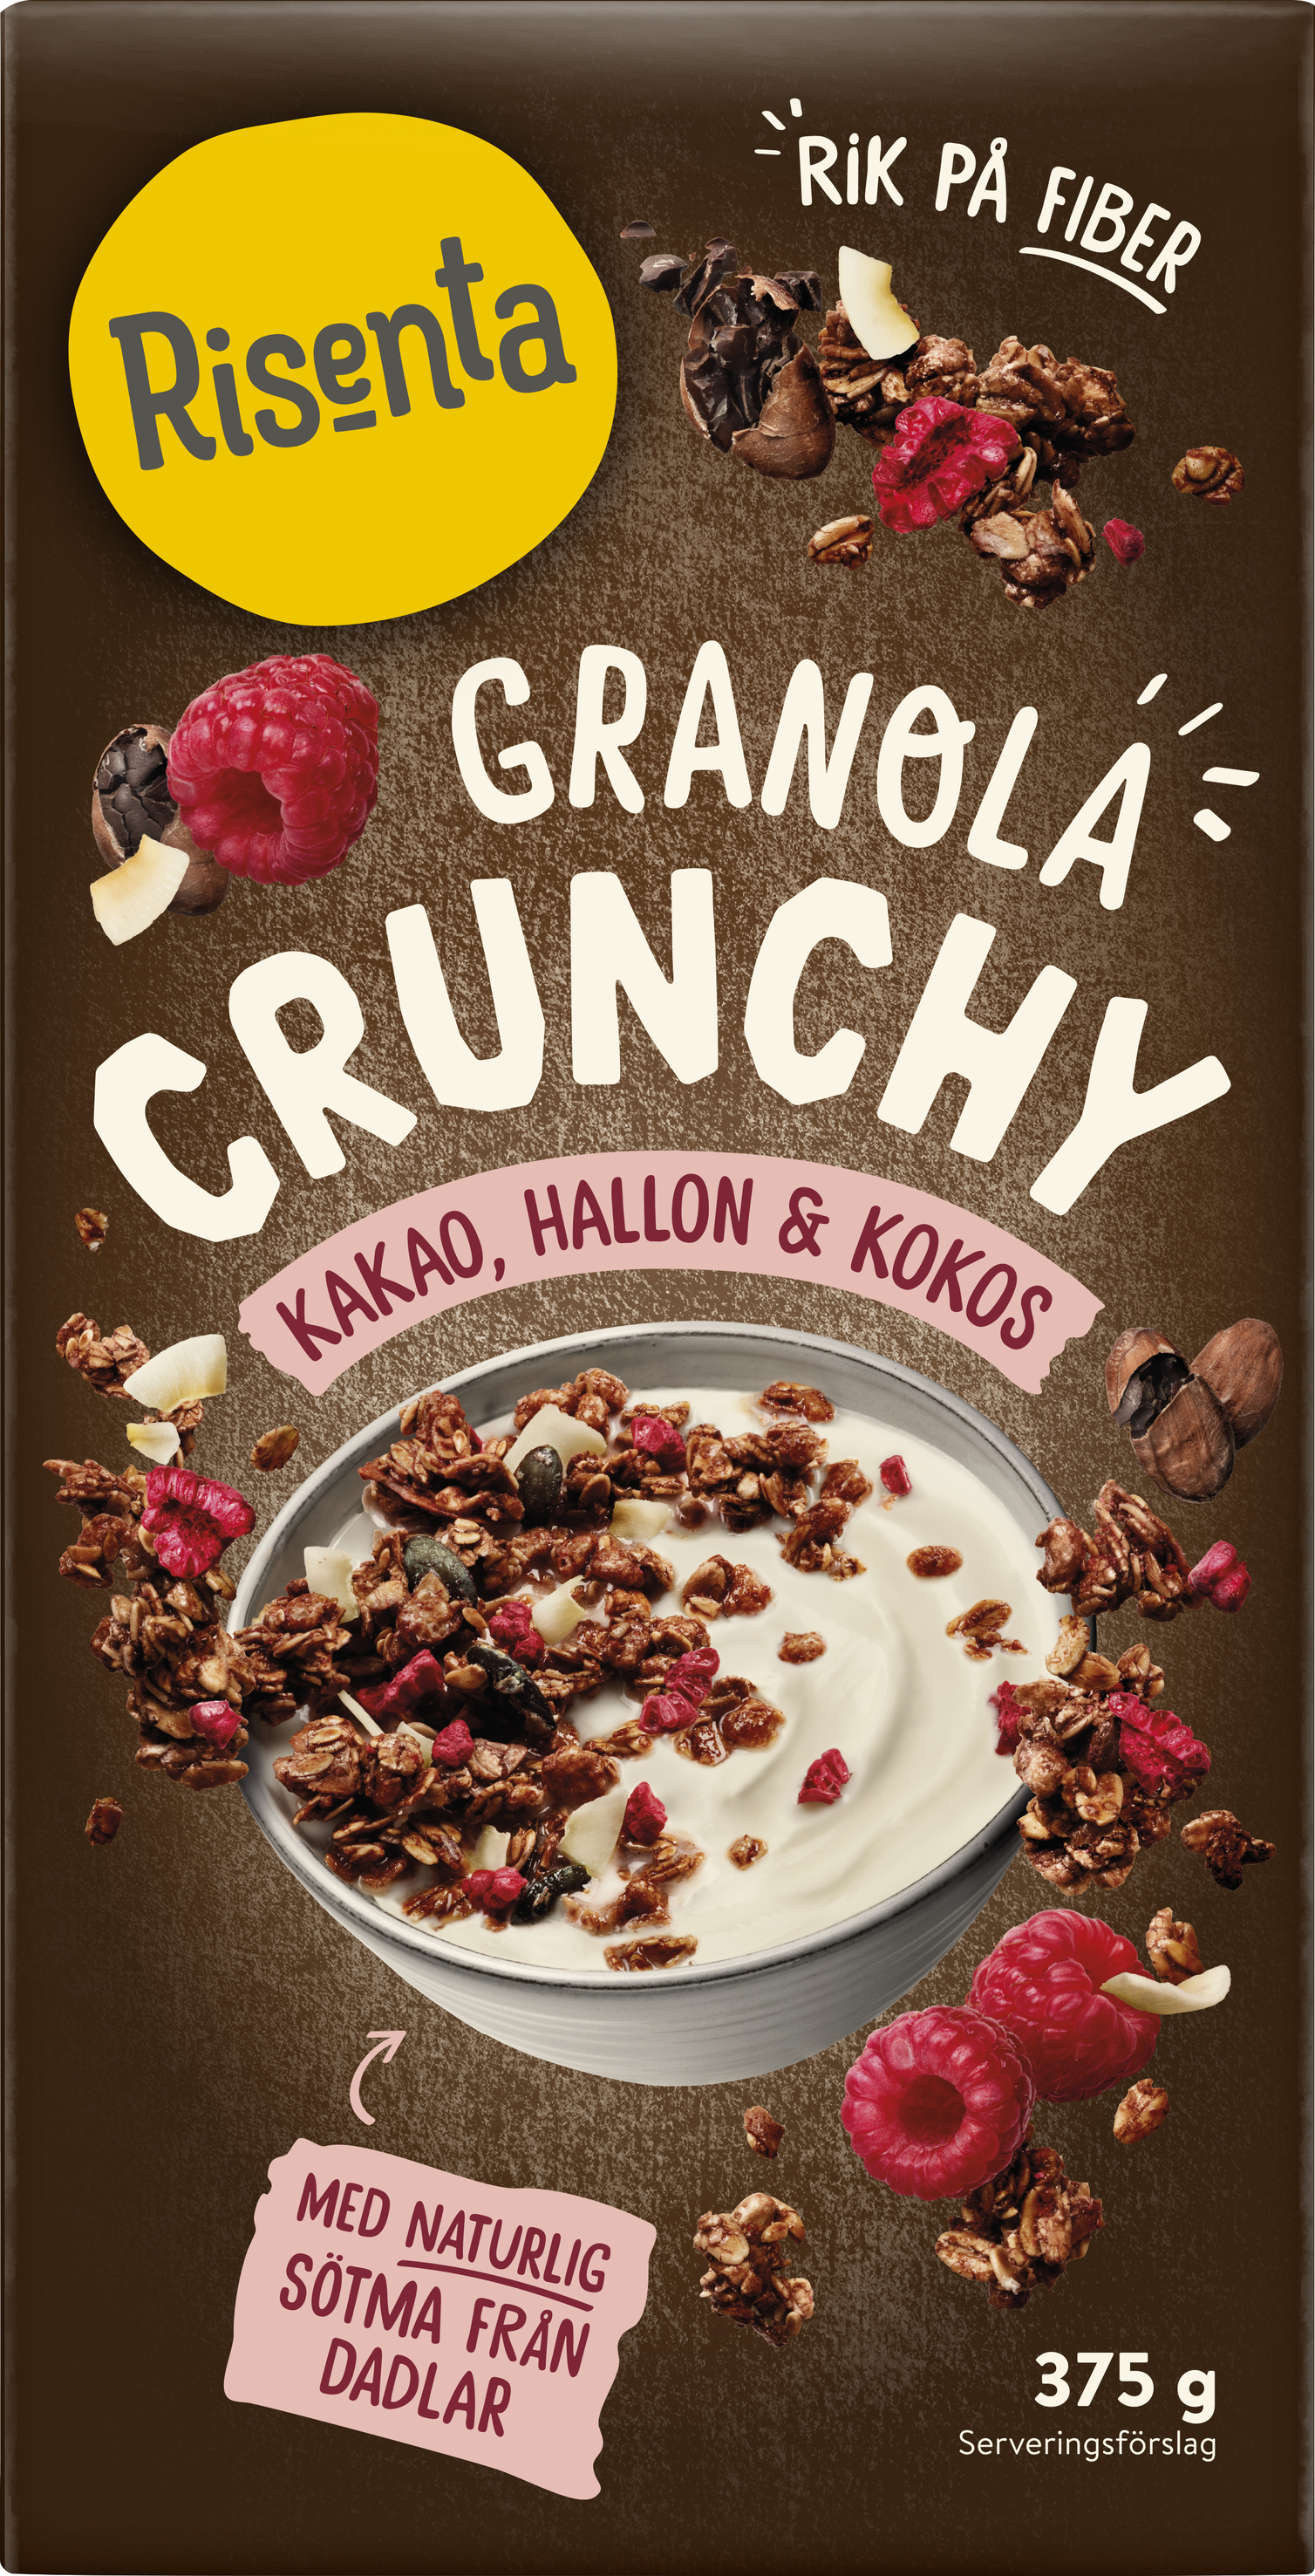 Risenta Granola Crunchy Kakao, Hallon & Kokos 375g